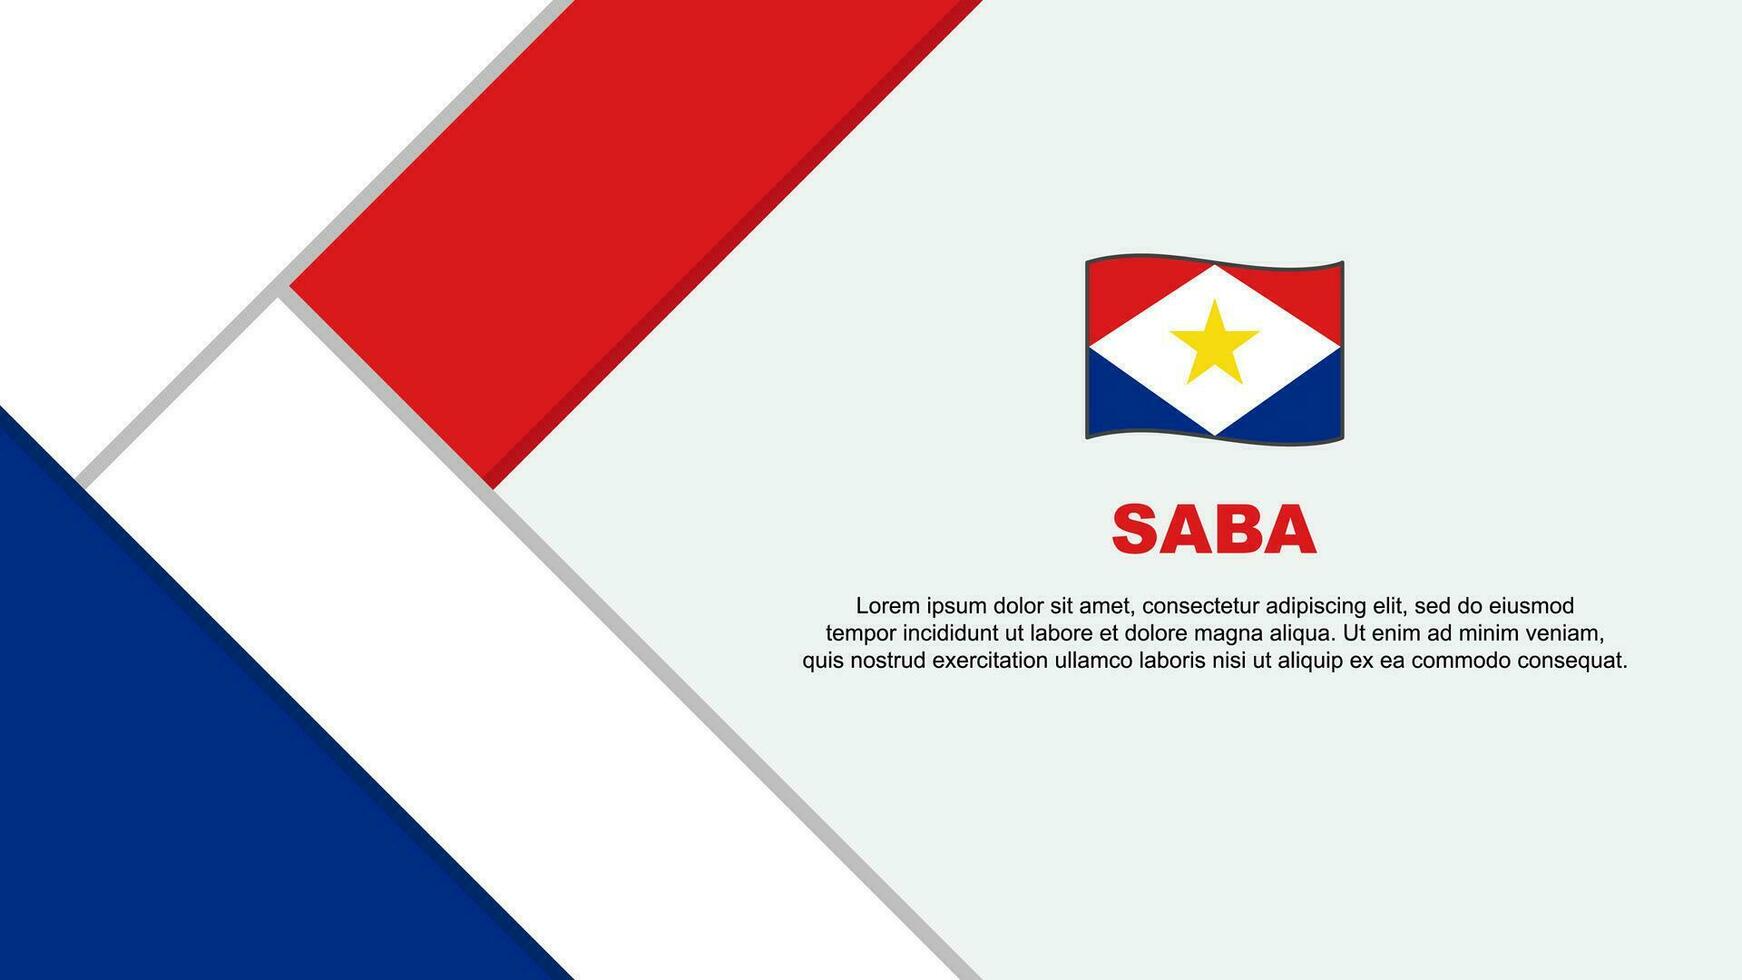 Saba Flag Abstract Background Design Template. Saba Independence Day Banner Cartoon Vector Illustration. Saba Illustration